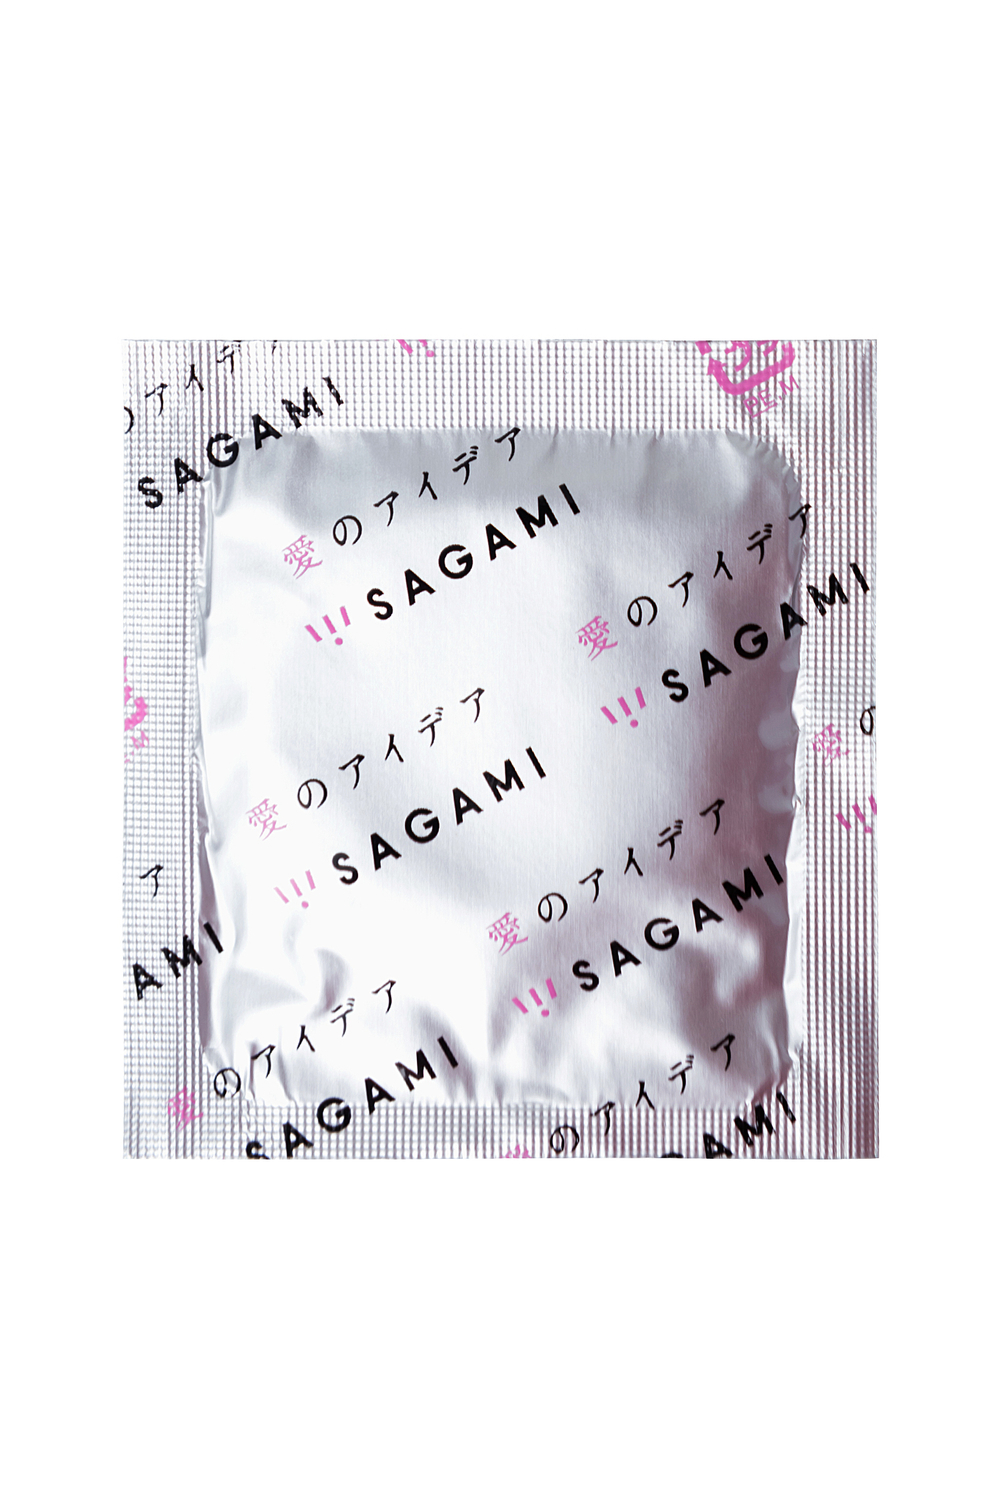 Презервативы Sagami Xtreme Feel Fit 3шт